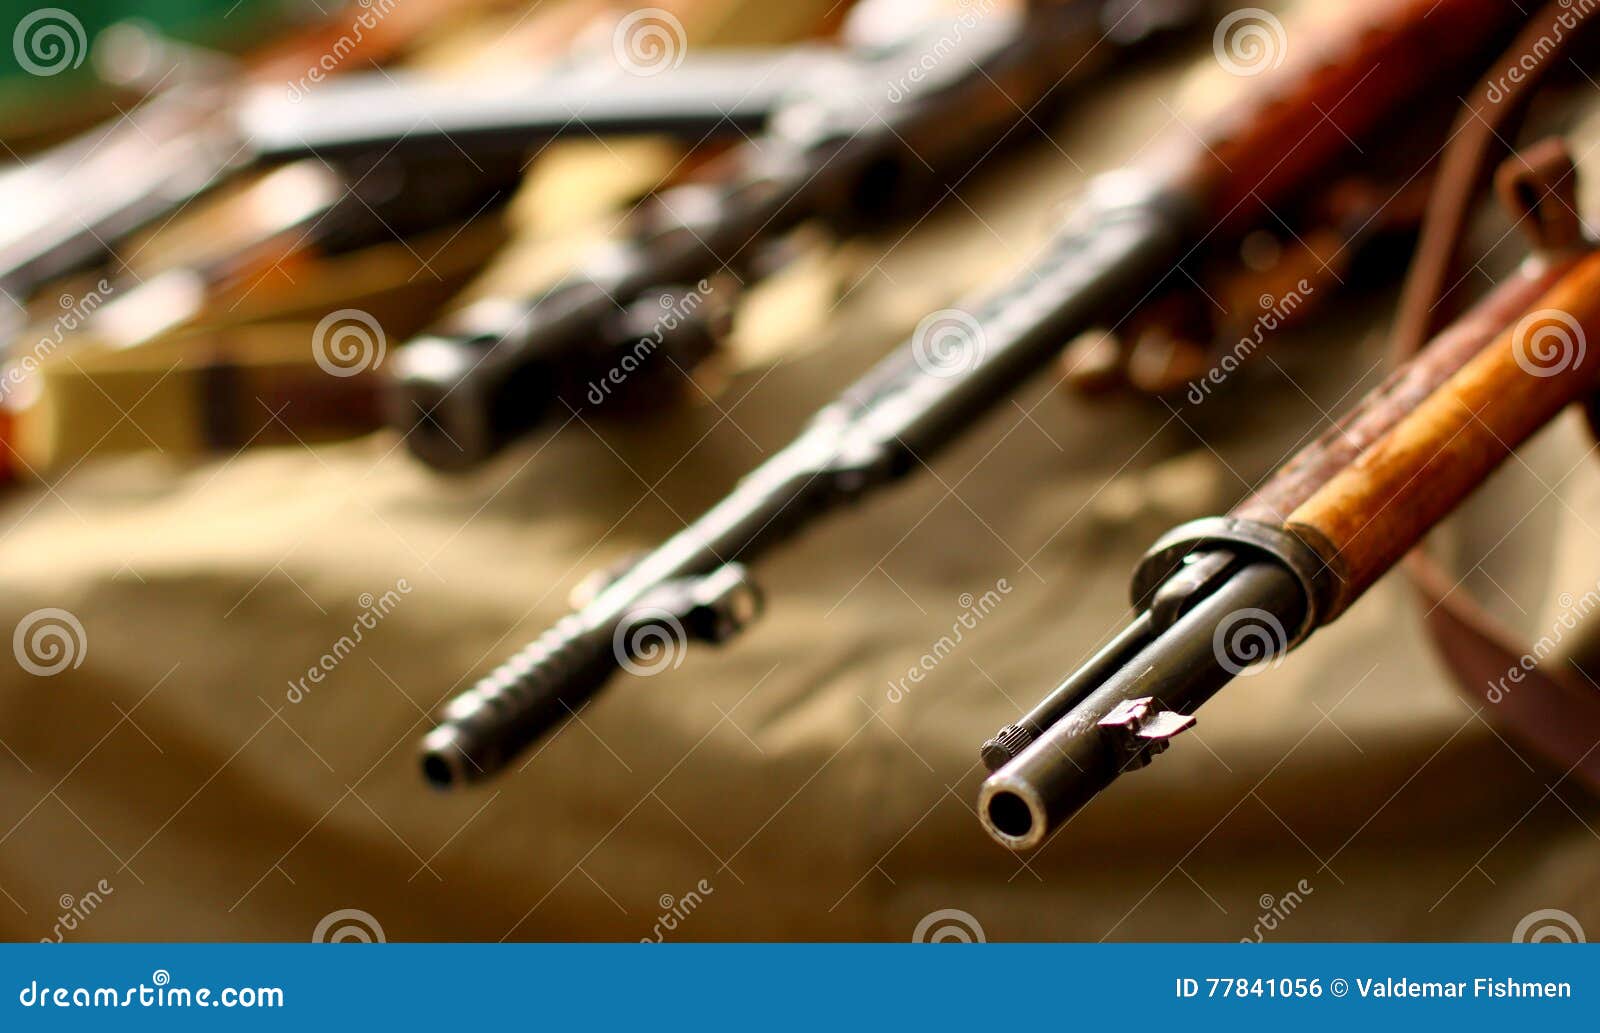 russian bintage gun rifle military background